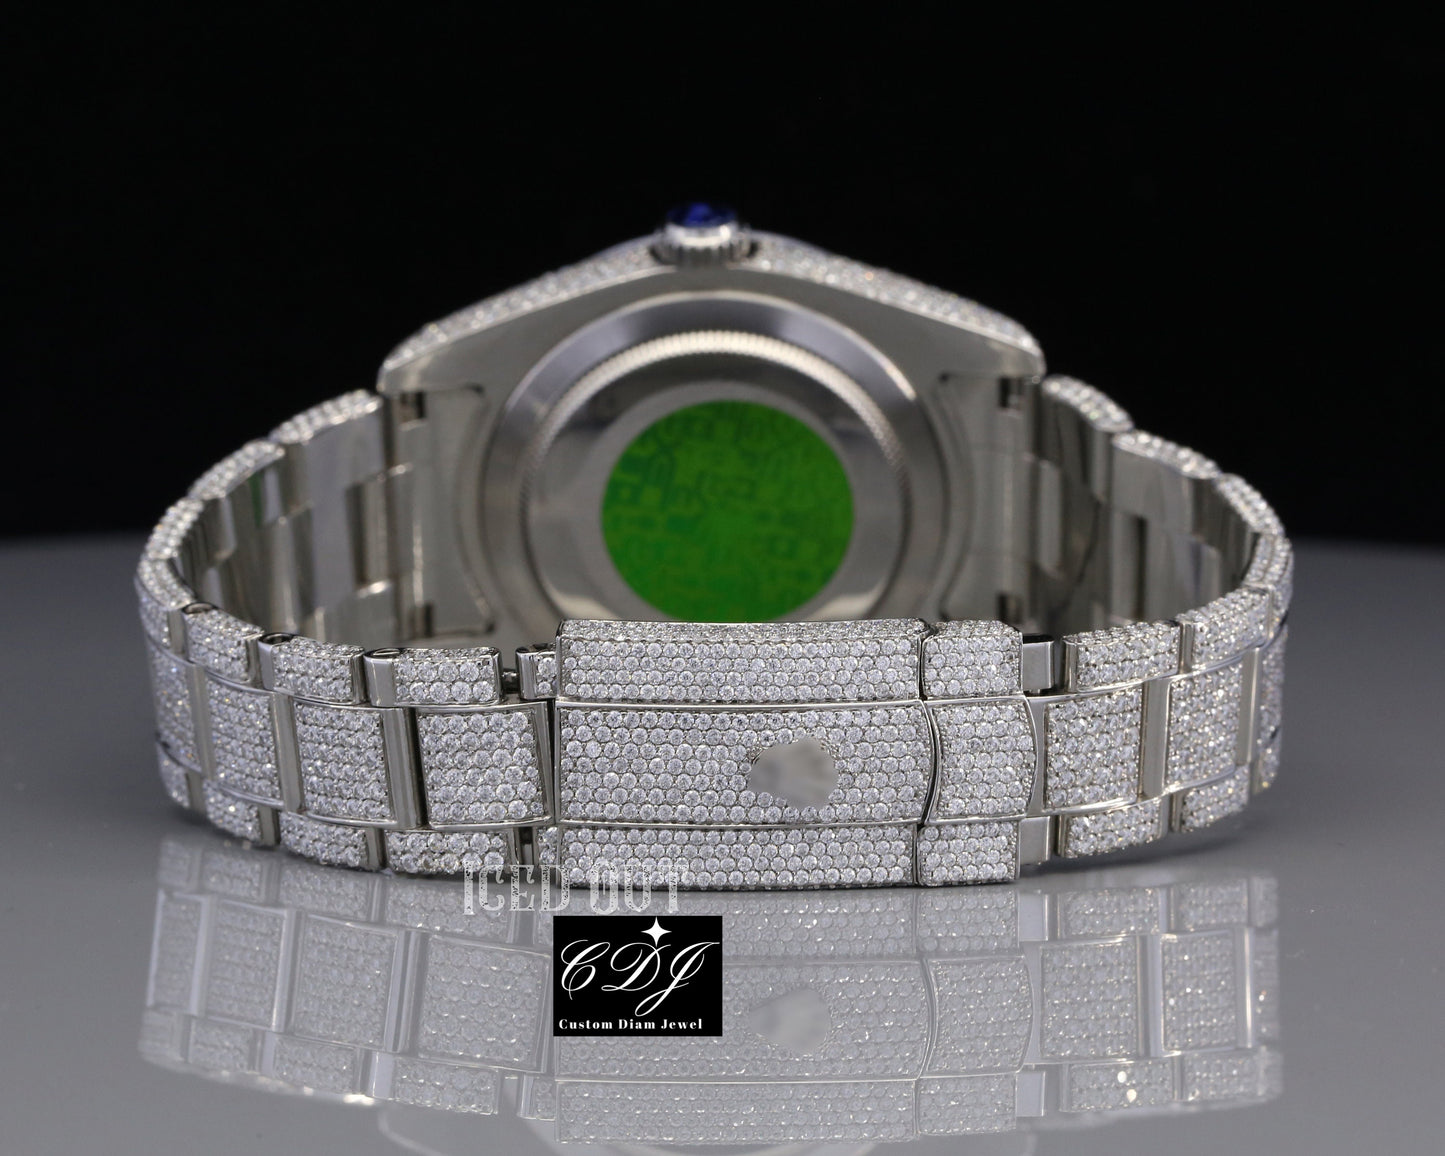 Luxury Personality Diamond Wrist hip-hop Watch (23 CT Approx)  customdiamjewel   